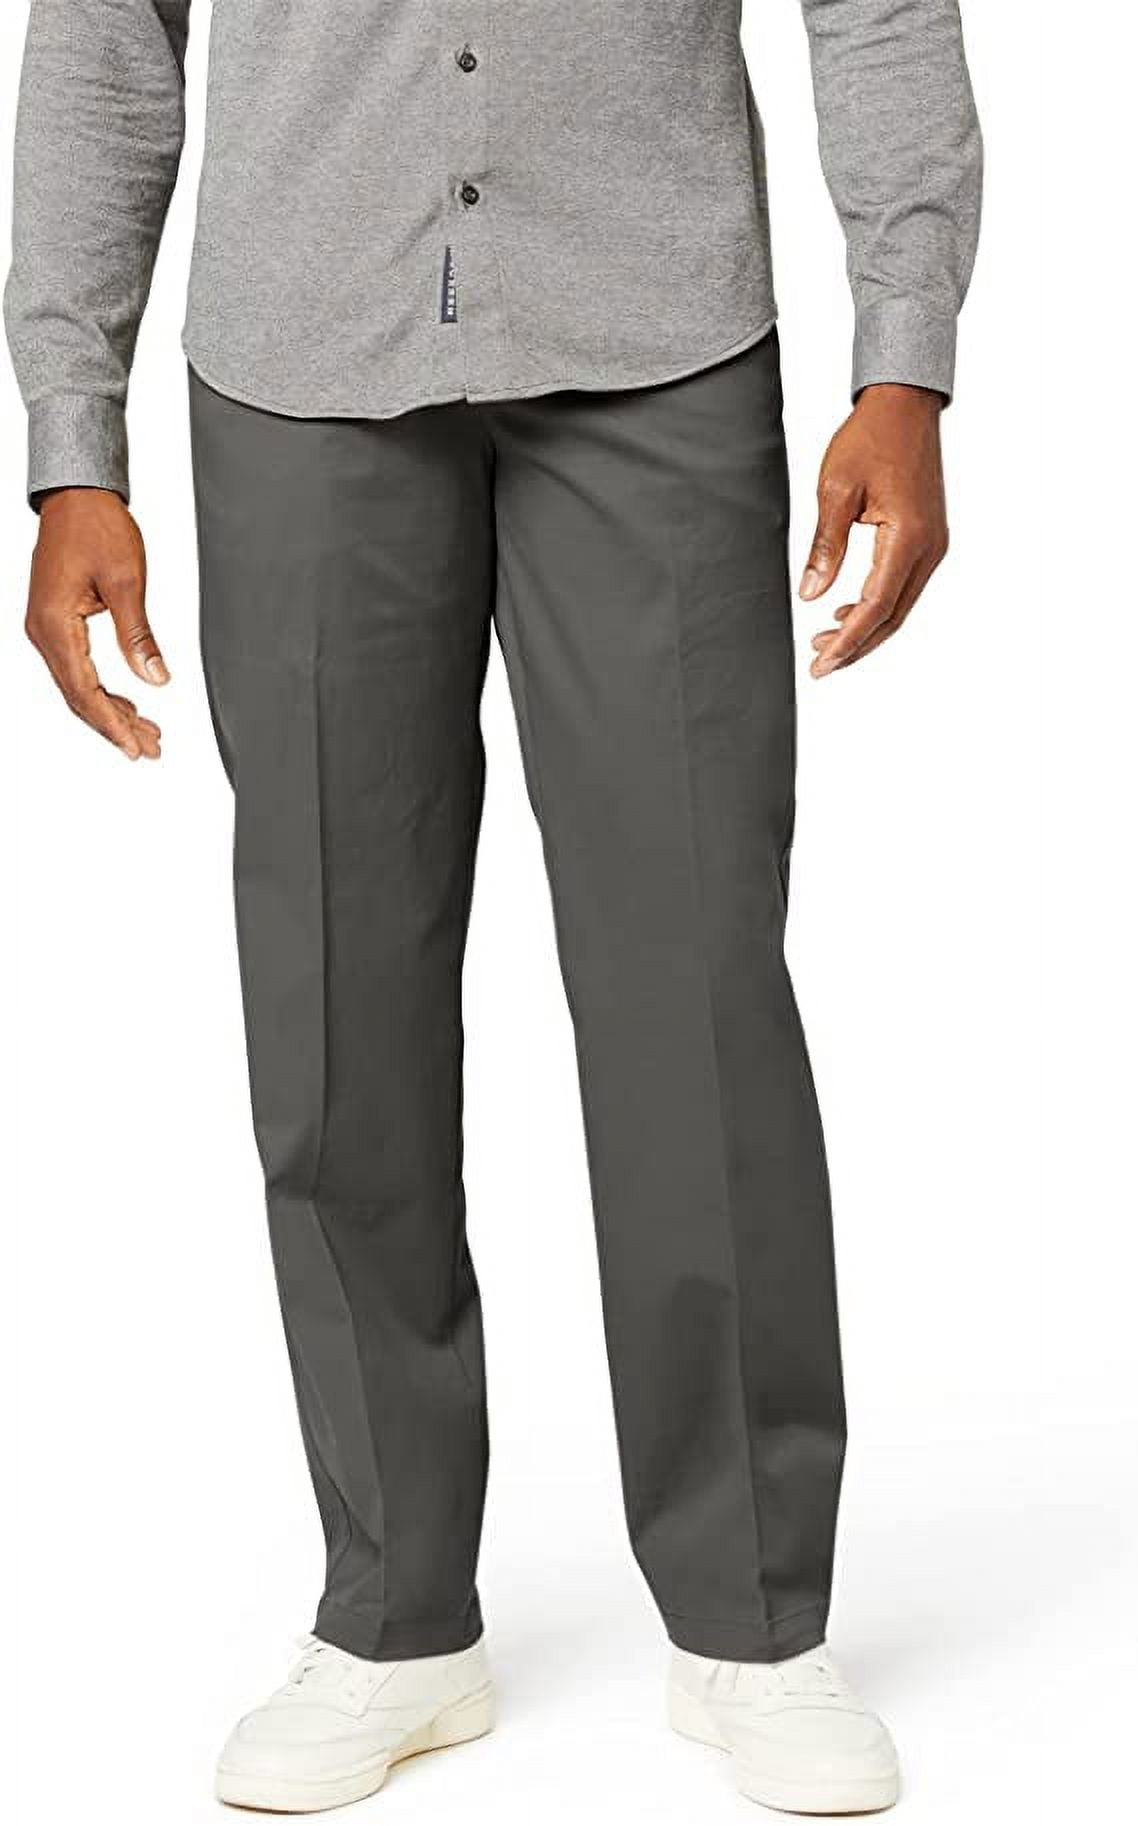 Dockers Men's Workday Khaki Classic Fit Smart 360 Flex Pants - Walmart.com